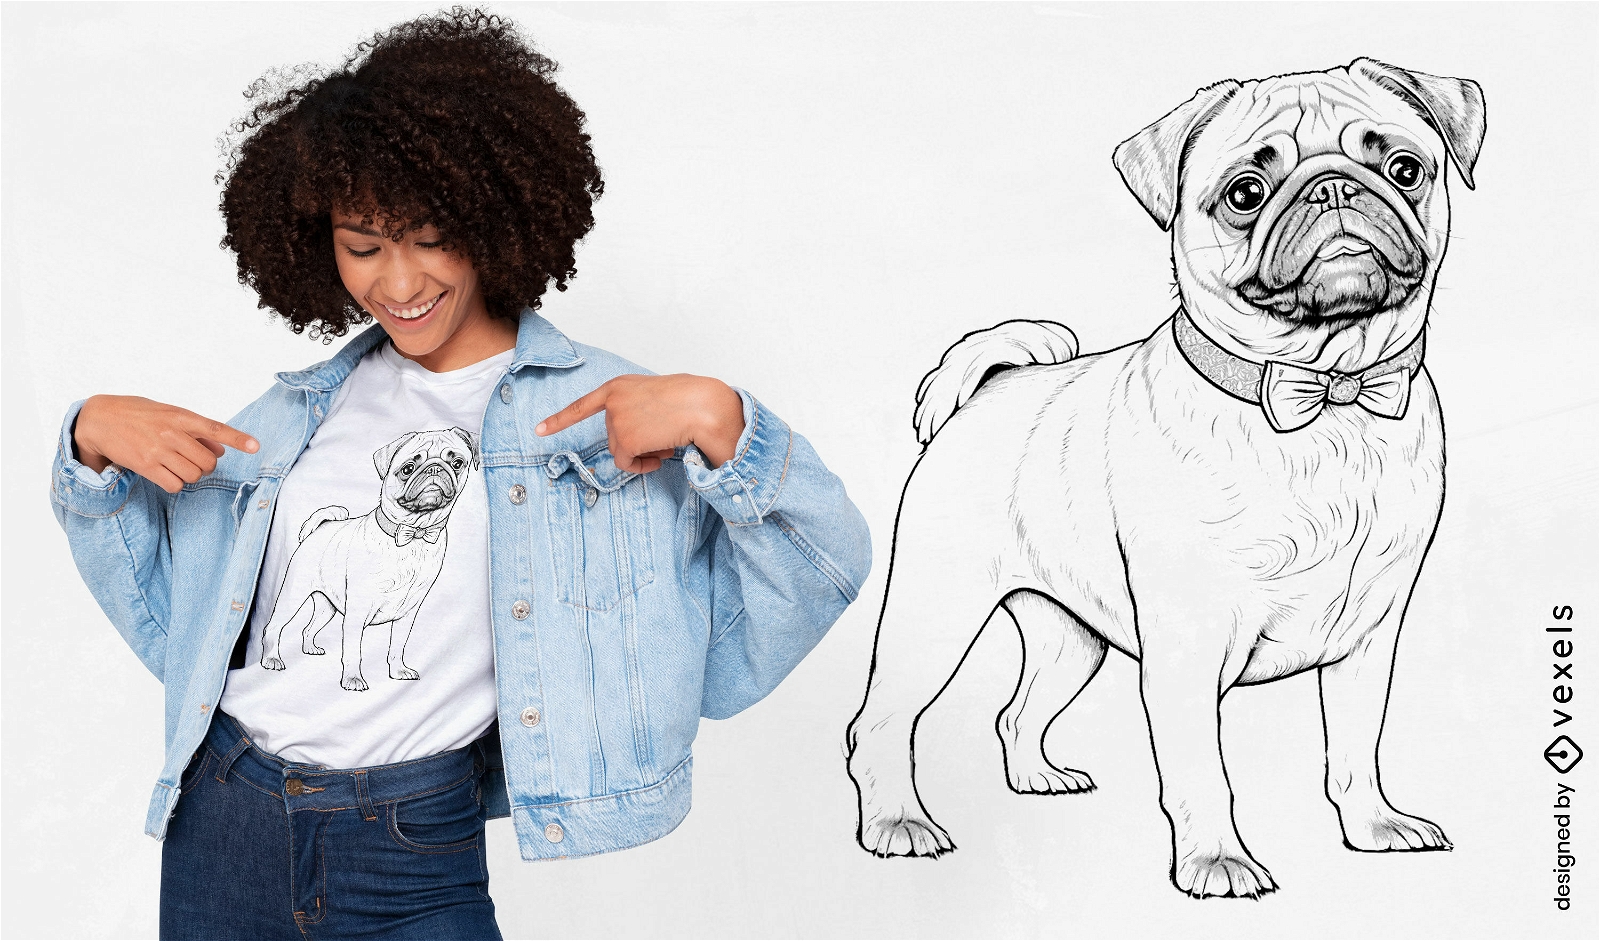 Charming pug dog t-shirt design